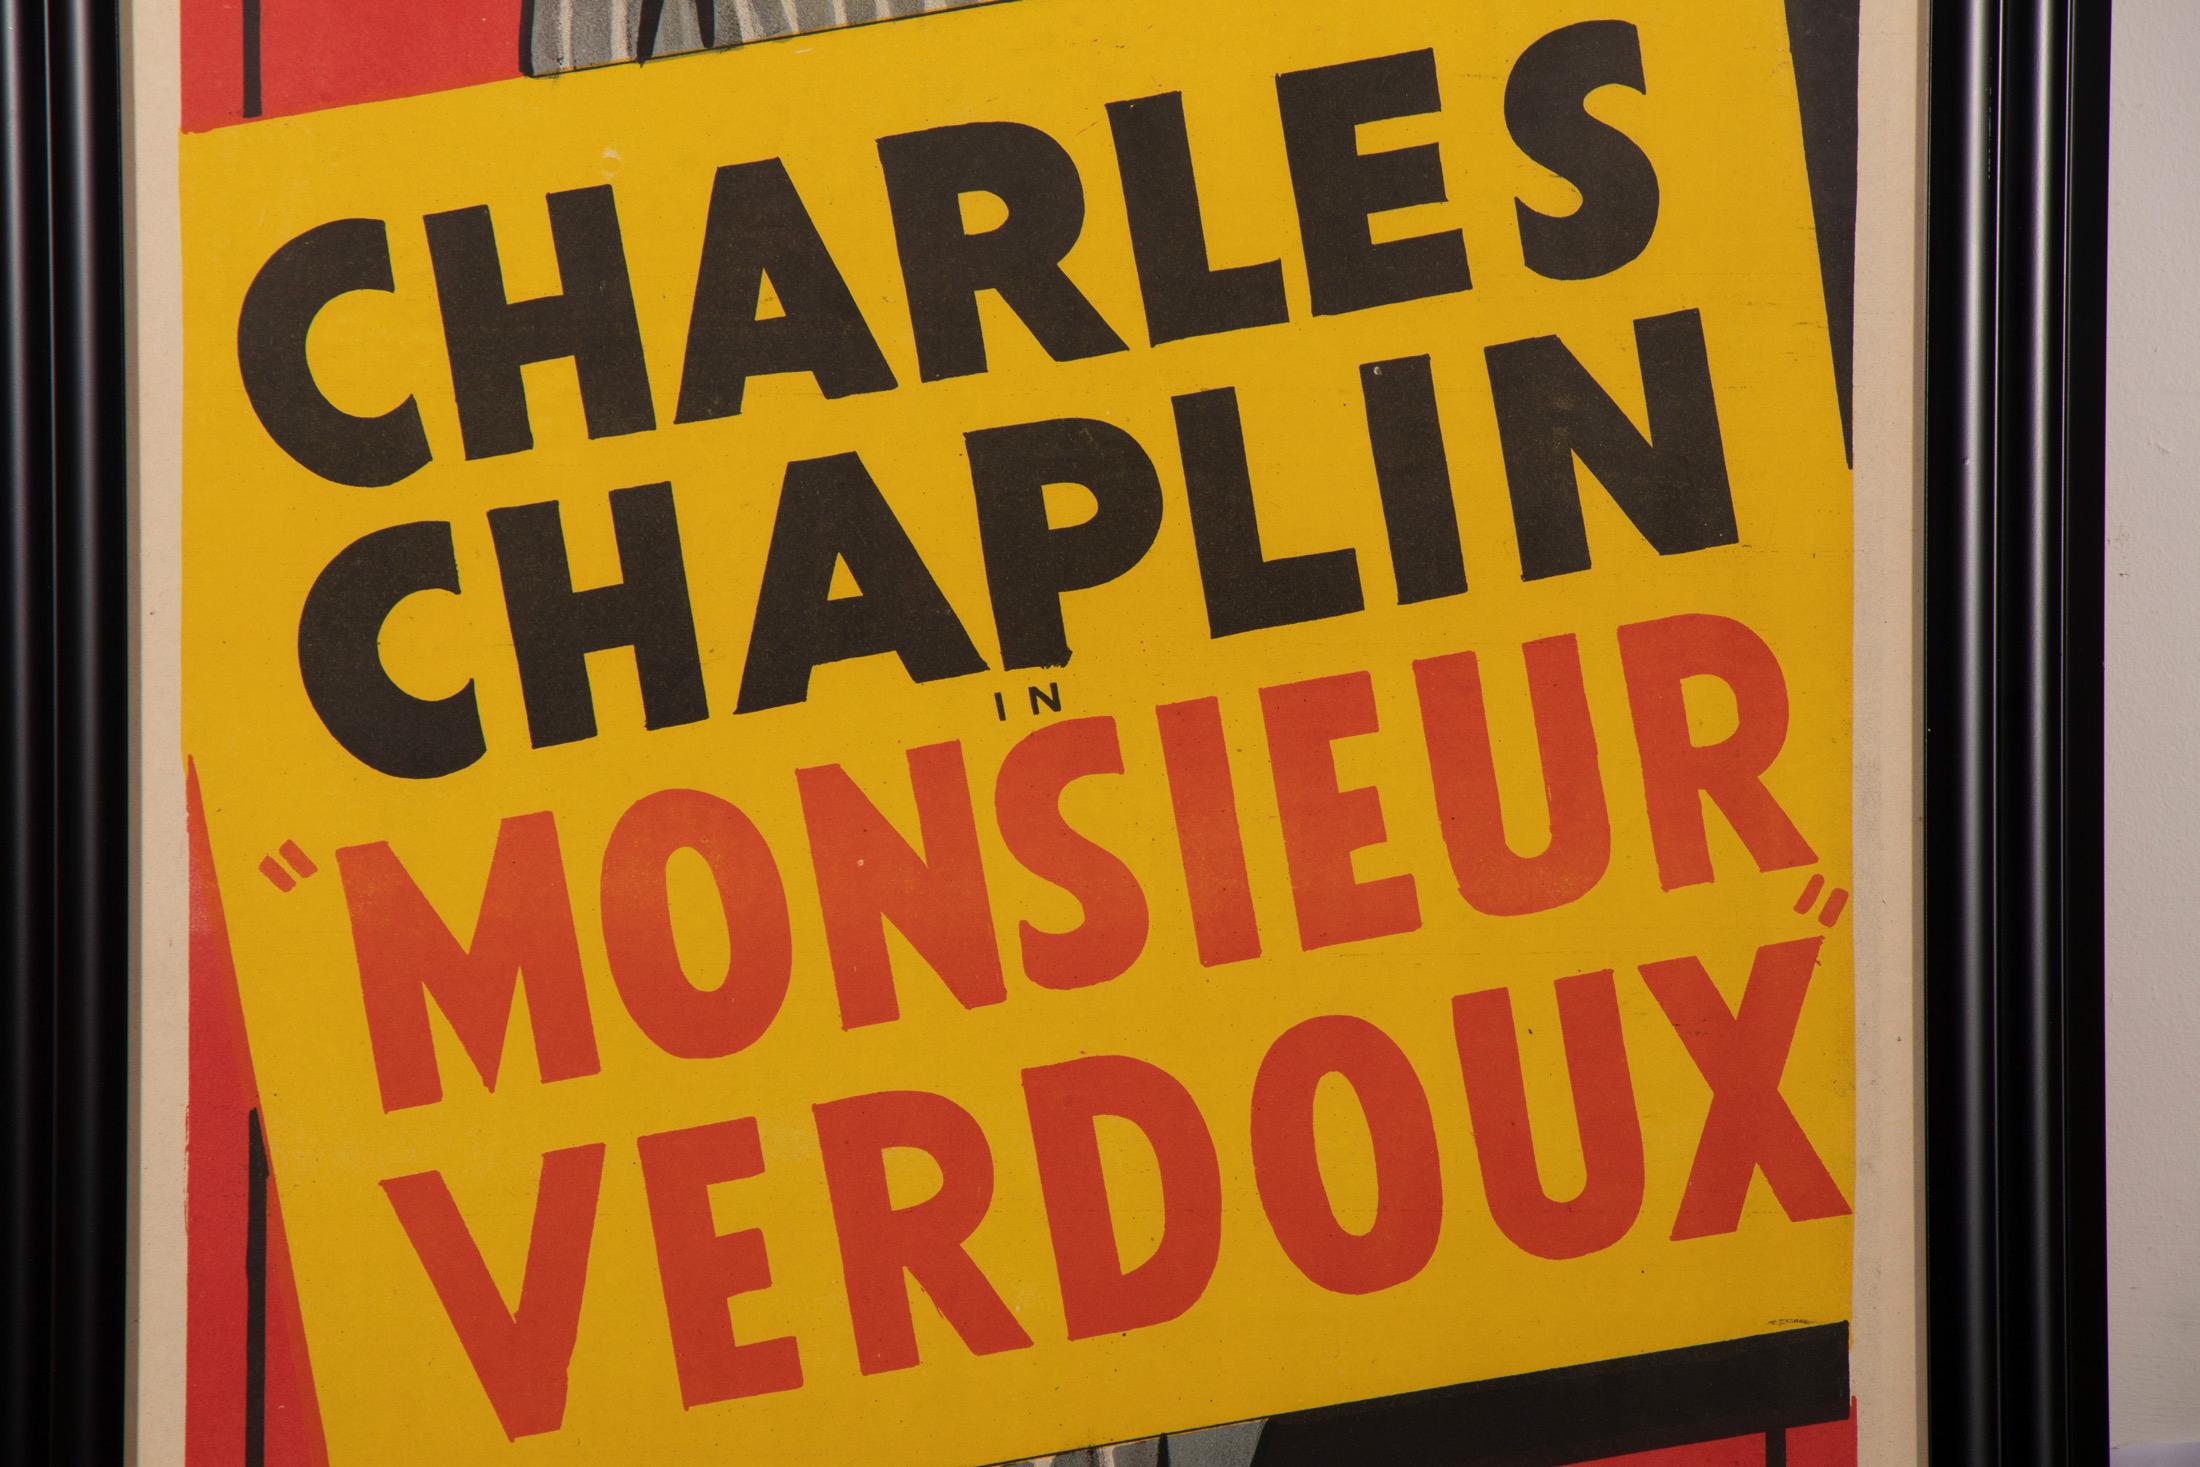 Vintage Charlie Chaplin poster for Monsieur Verdoux.
Newly framed.
Measures: H 160 cm, W 59 cm, D 4 cm
British, circa 1947.